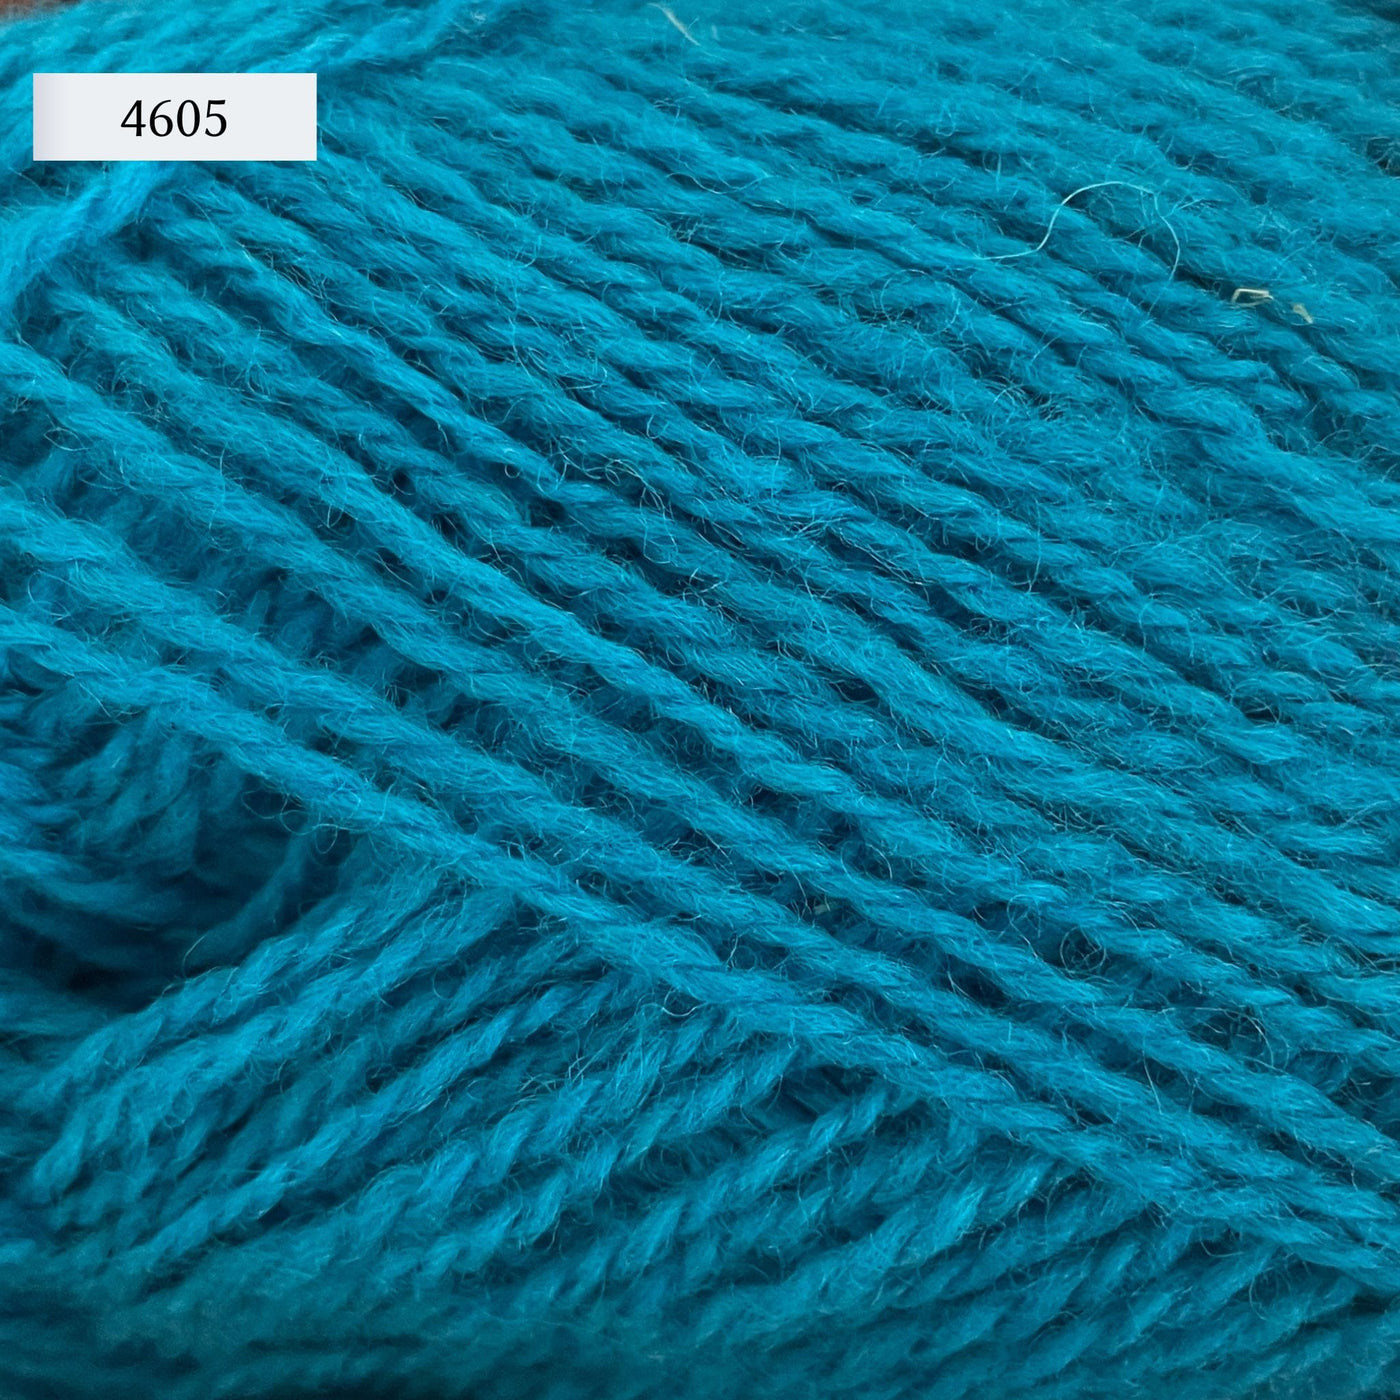 Rauma Finullgarn, a fingering/sport weight yarn, in color 4605, a medium turquoise blue